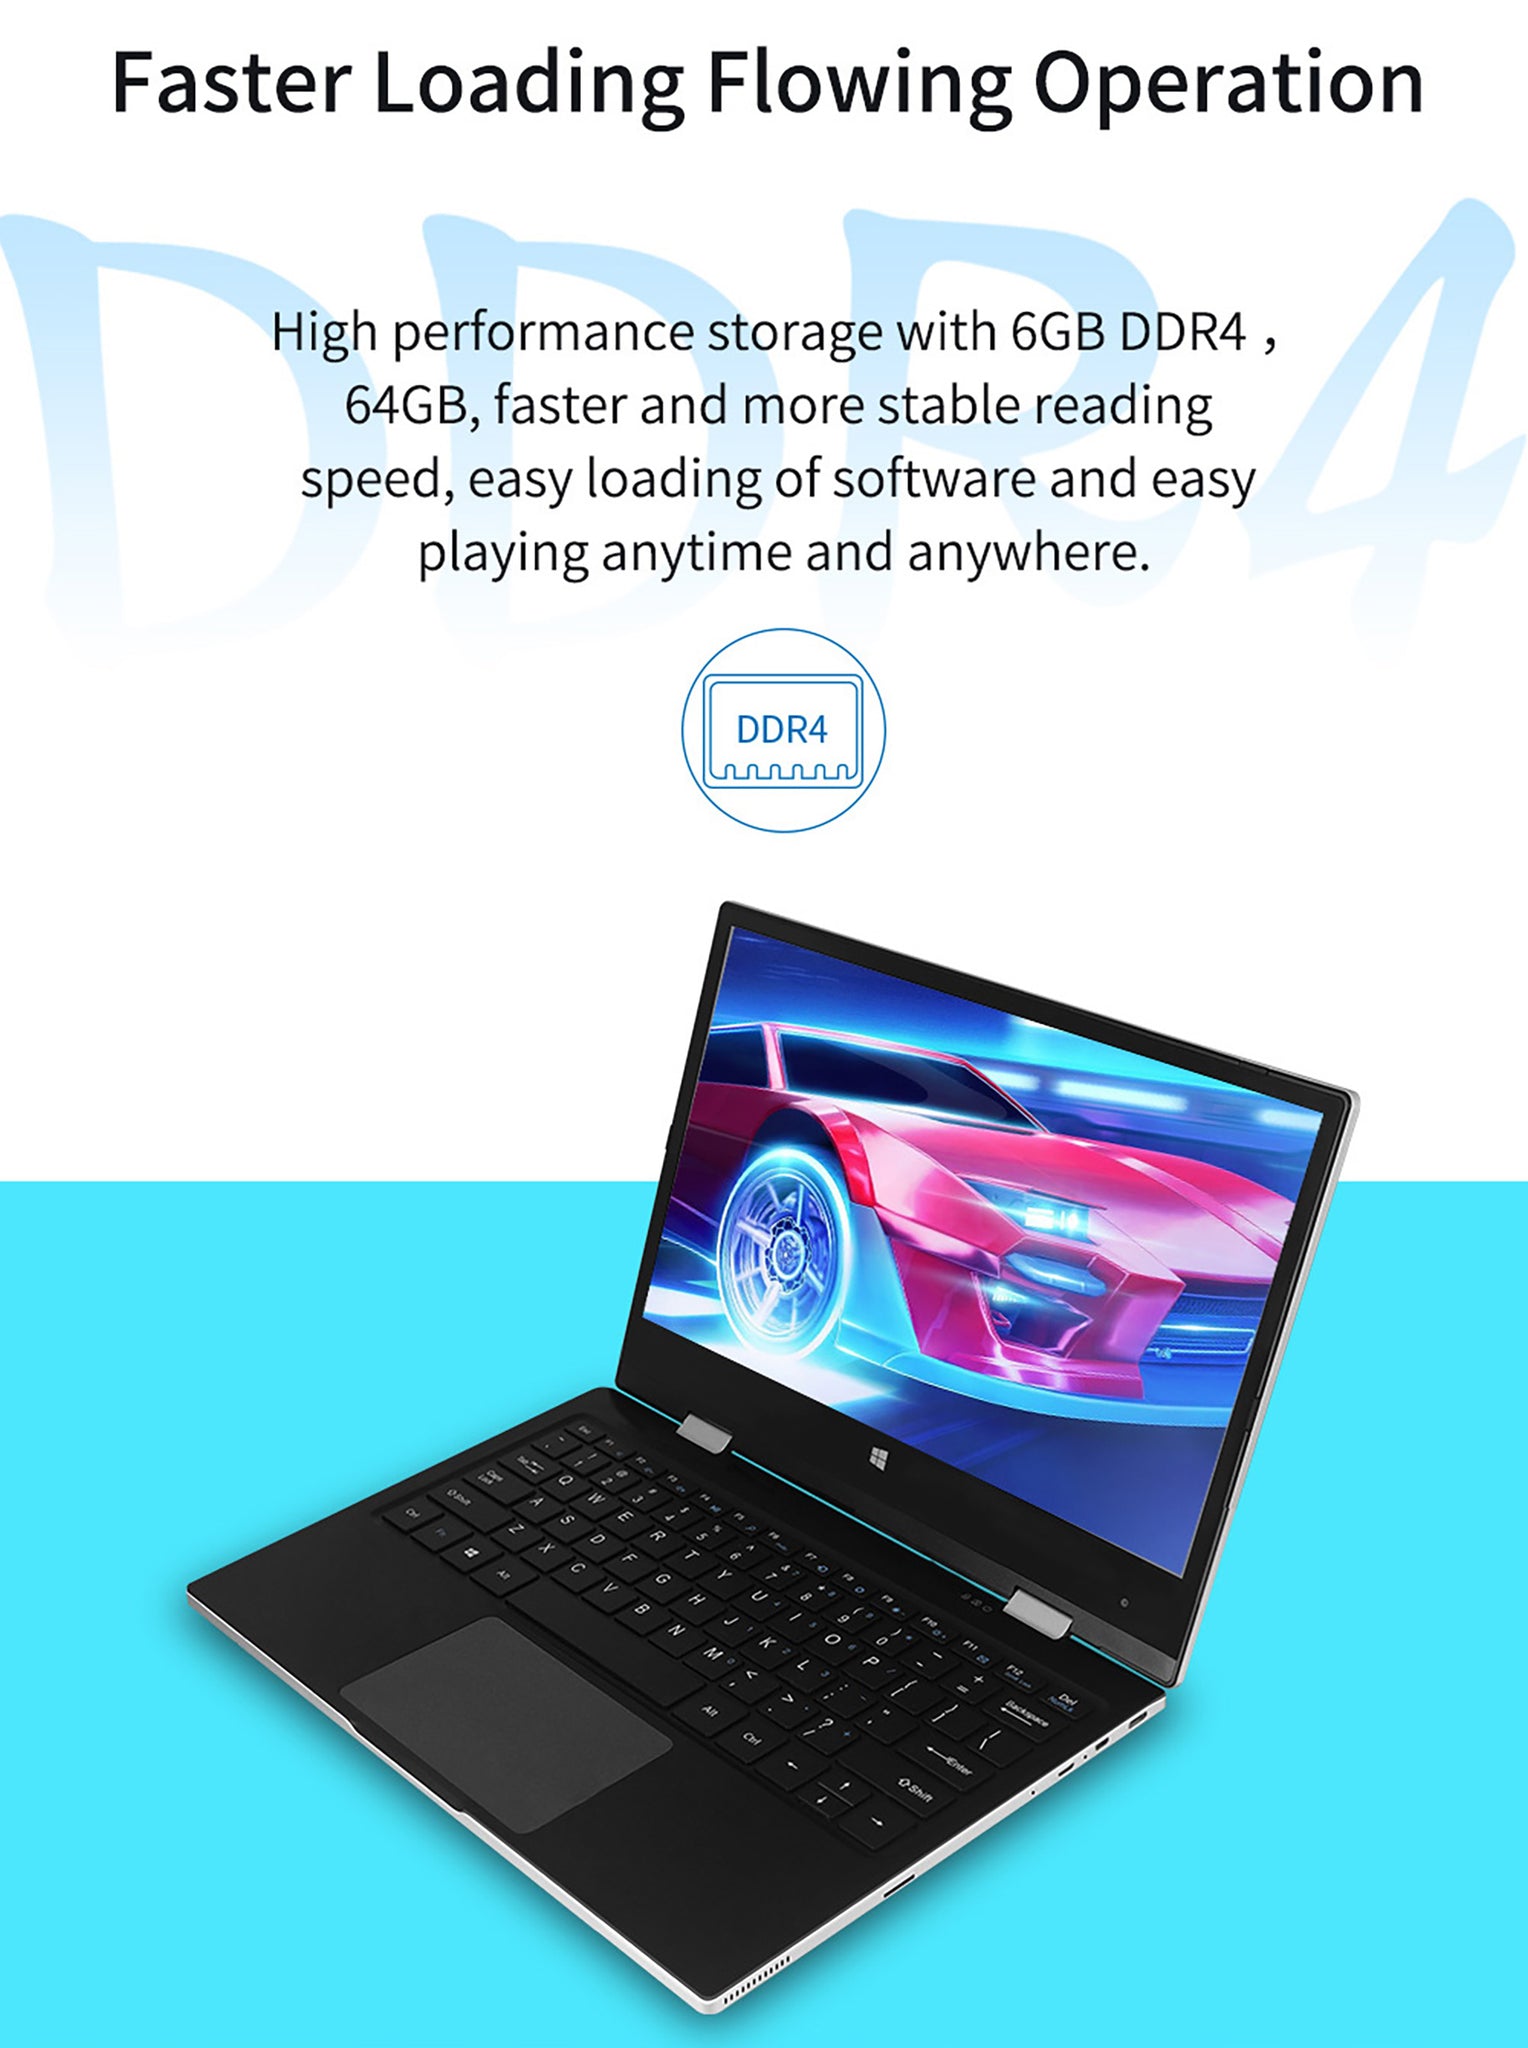 Jumper Tech Laptop EZbook Ordinateur Portable 11.6 FHD Intel Apollo N3450  6Go RAM DDR4 128Go SSD Win 10 Argent